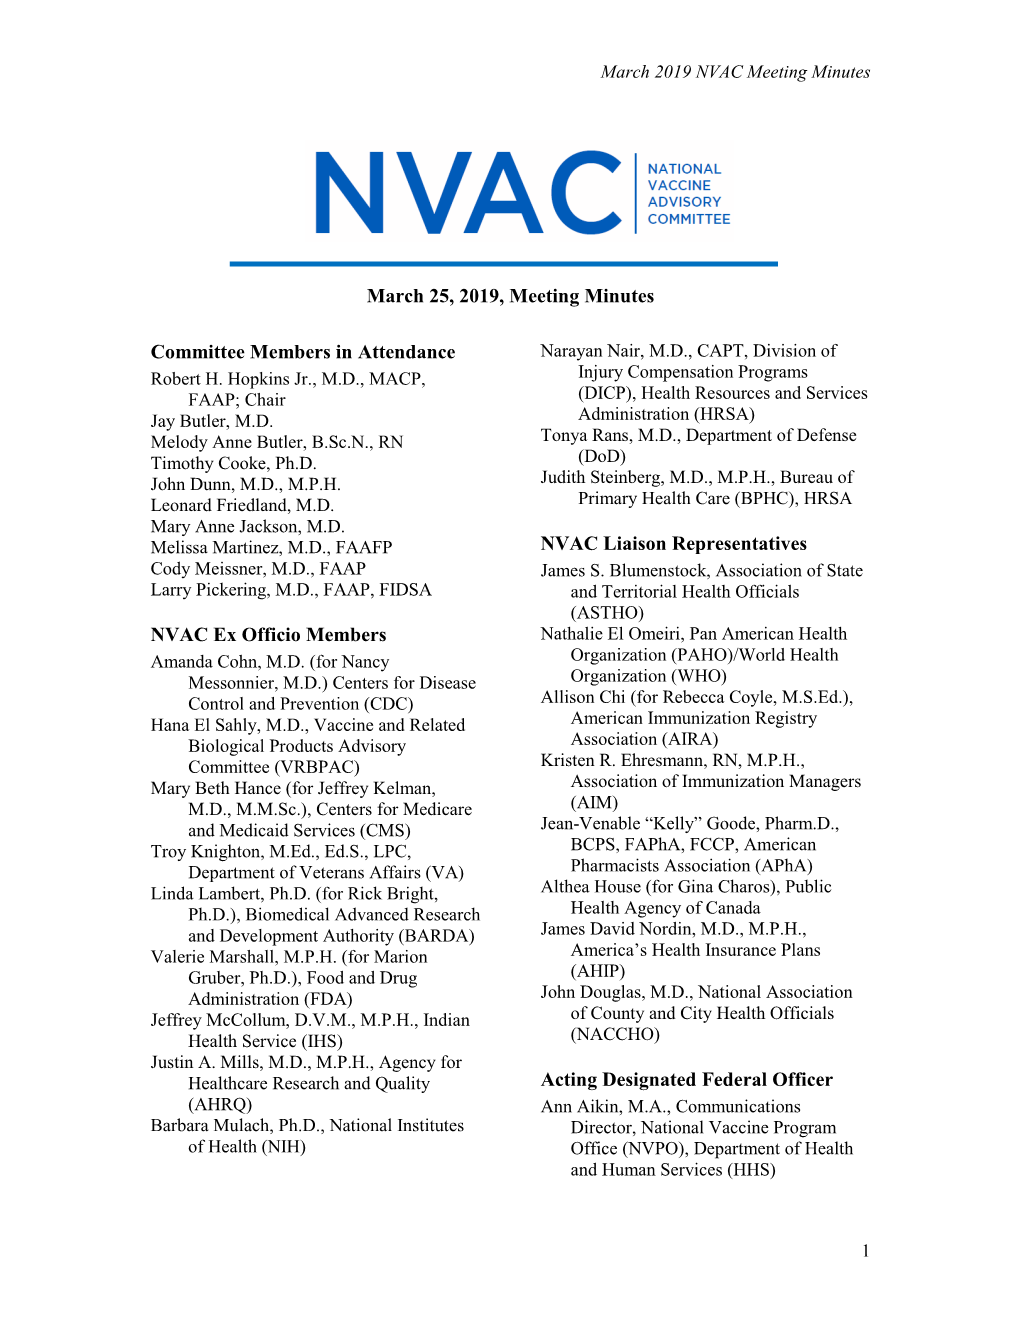 NVAC March 25, 2019, Meeting Minutes